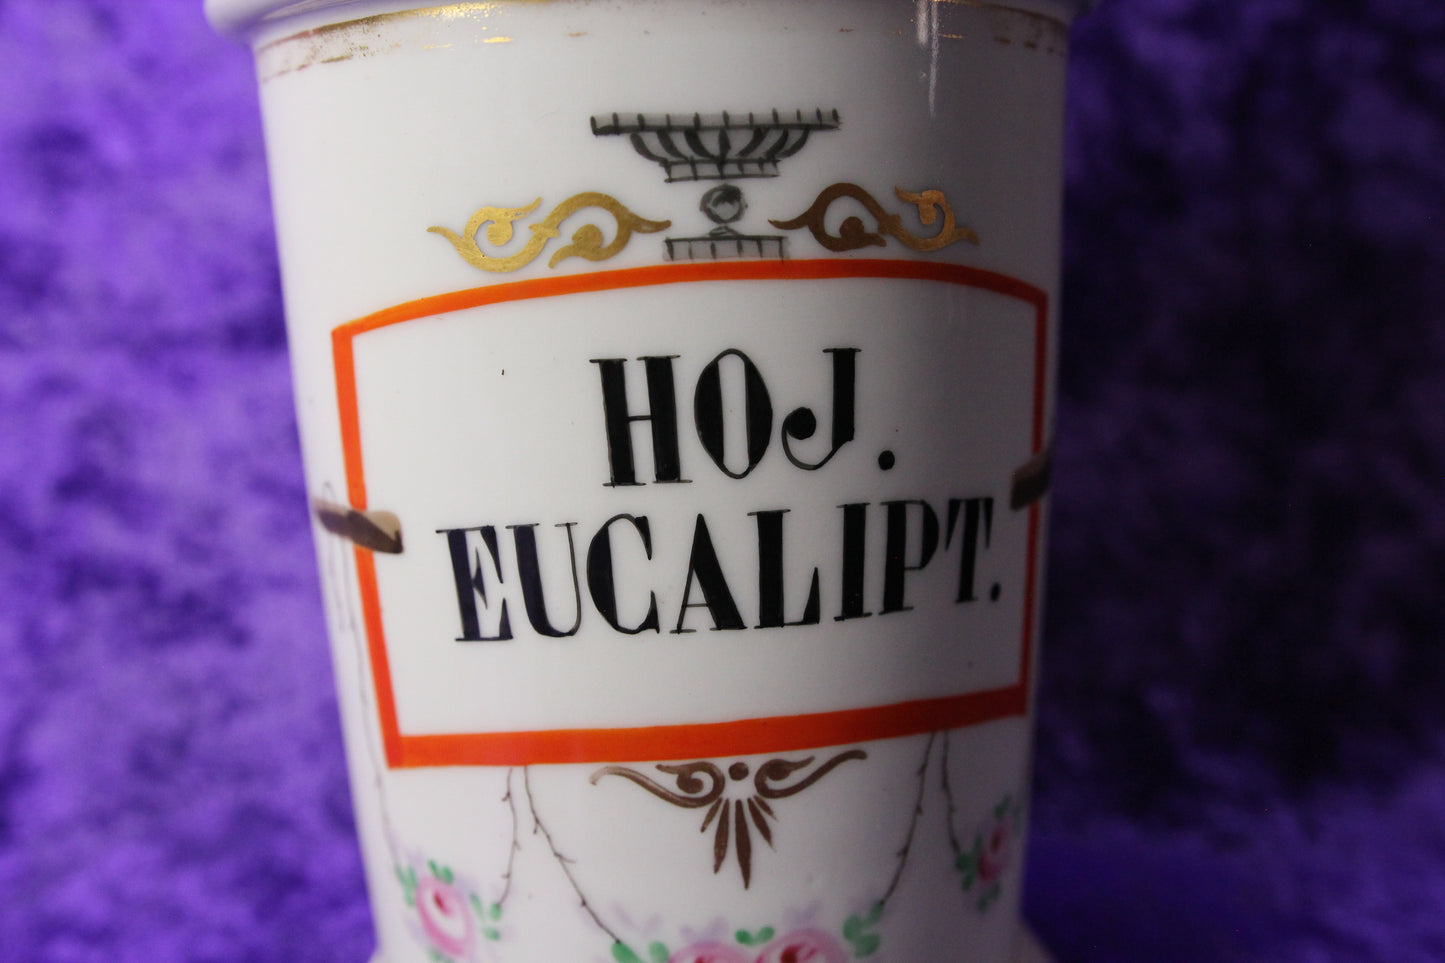 Hoj Eucalipto Antique French Apothecary Jar